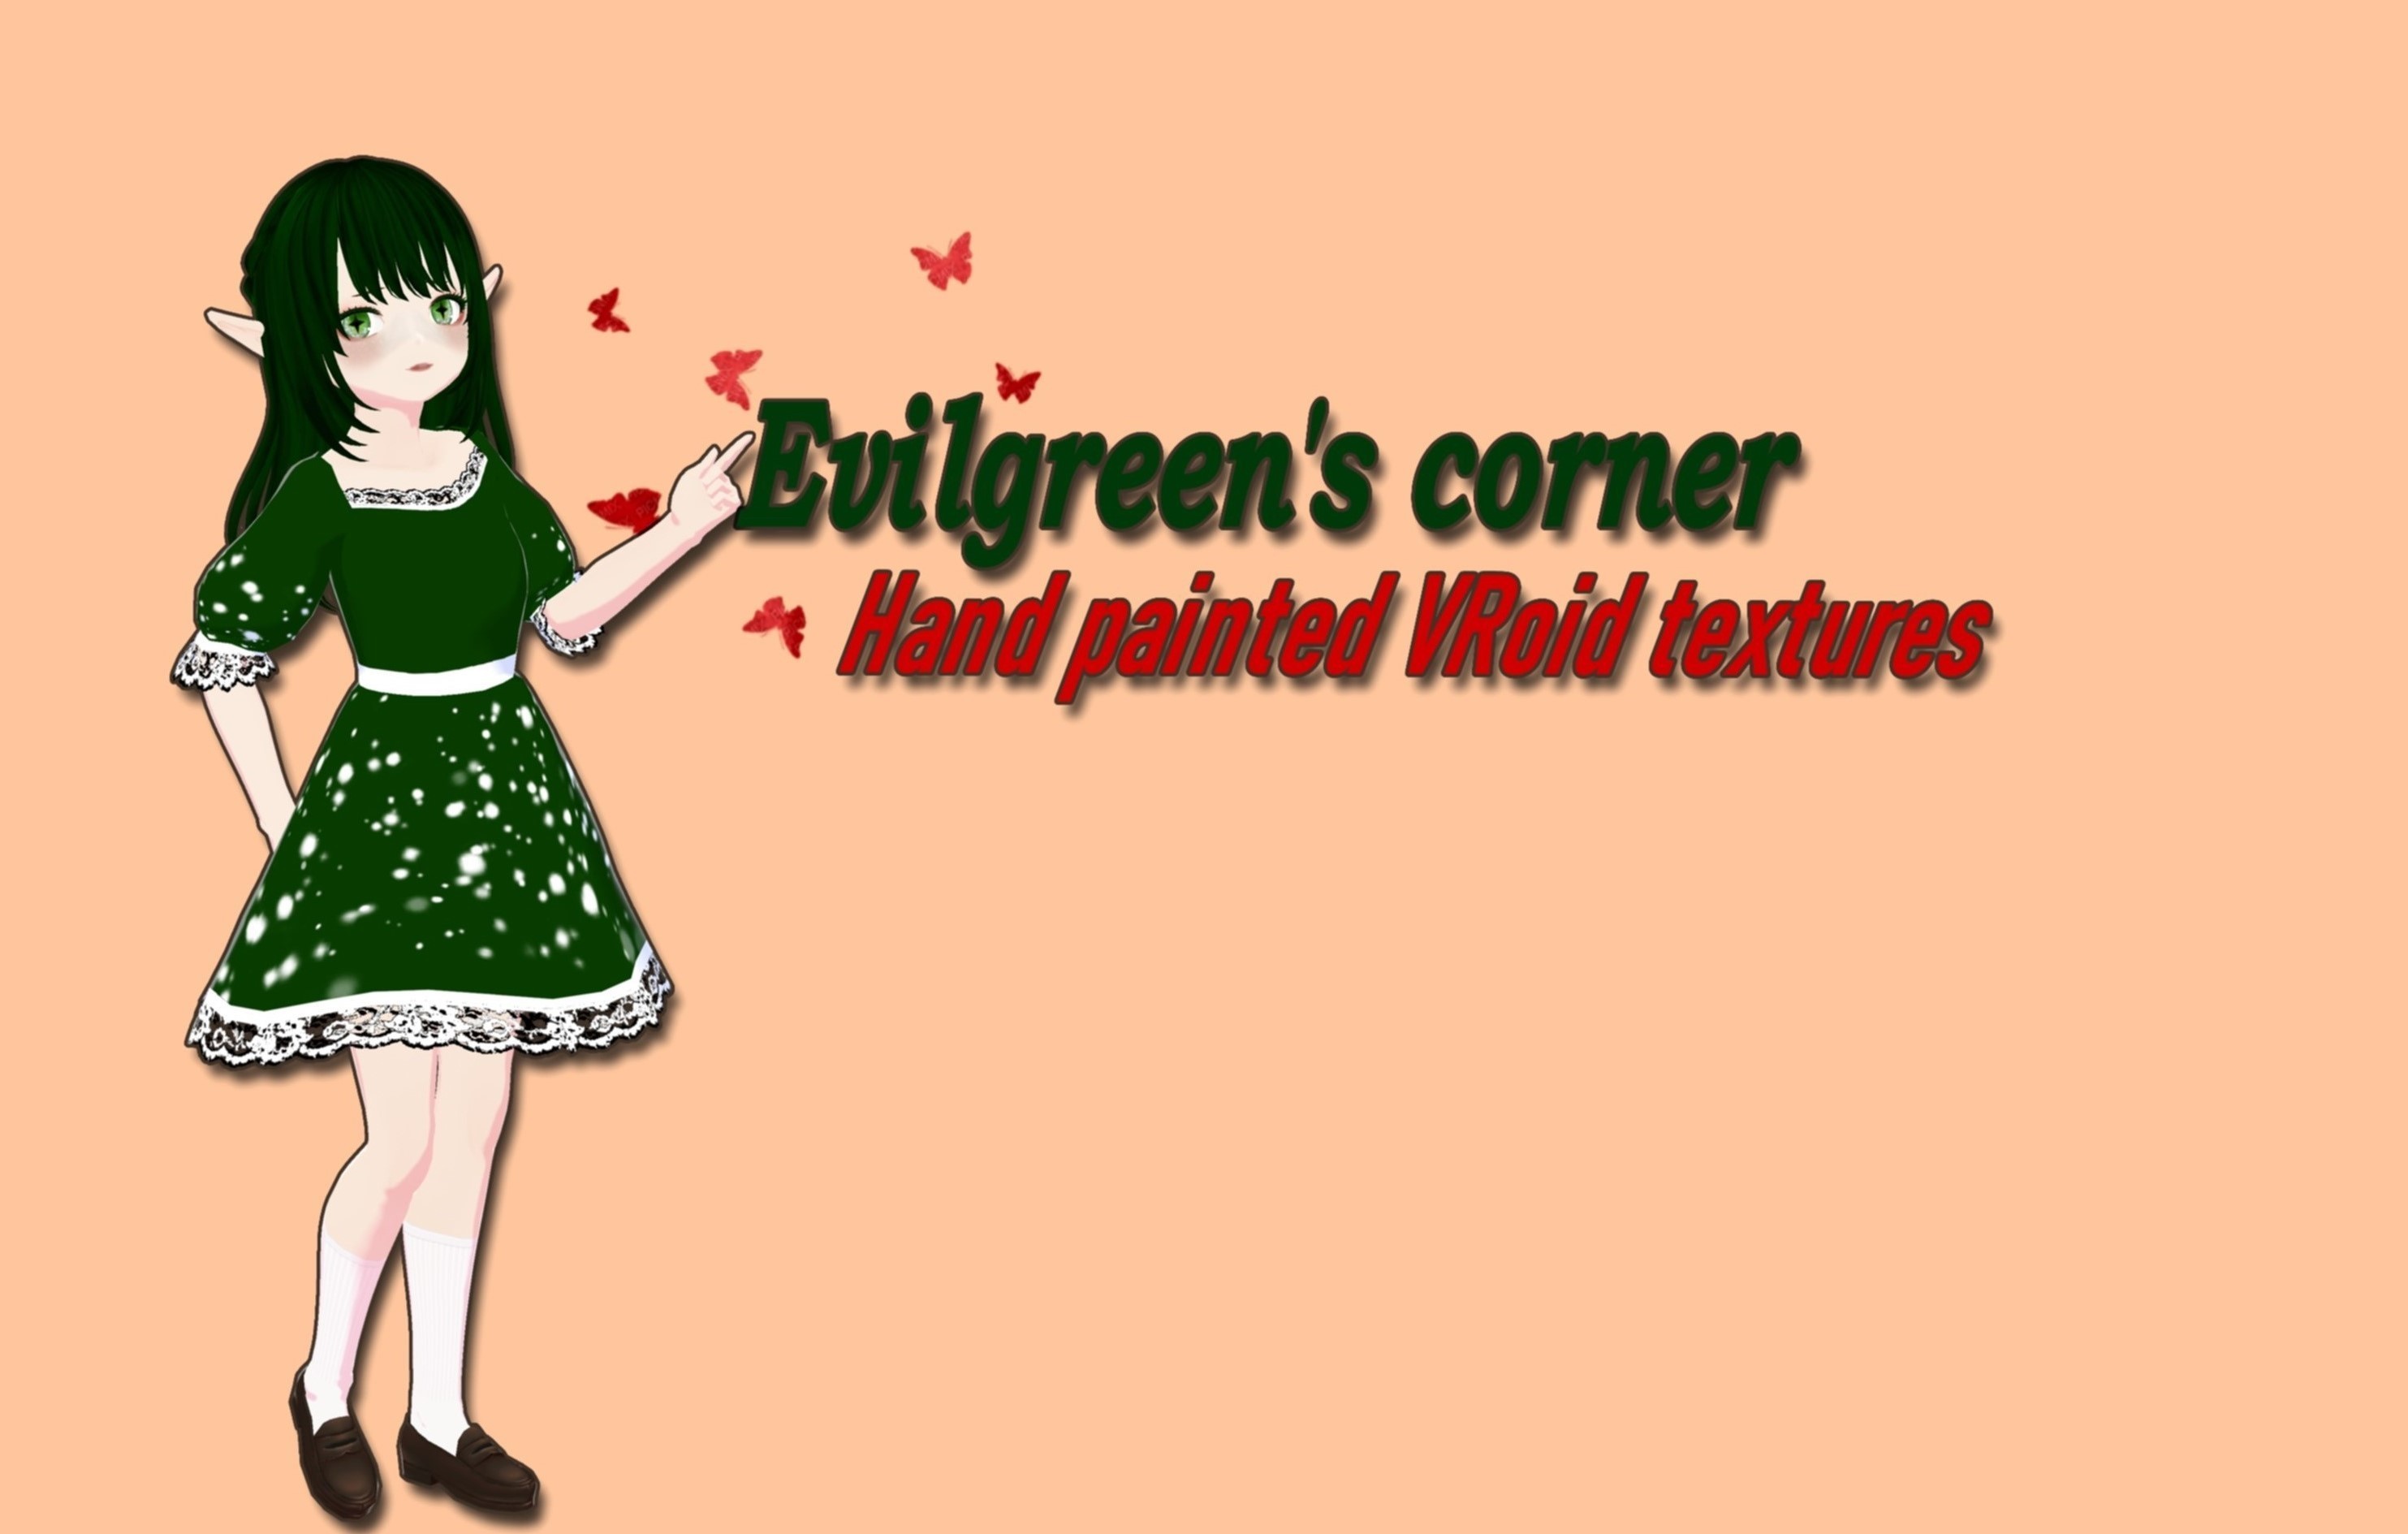 Evilgreen's corner